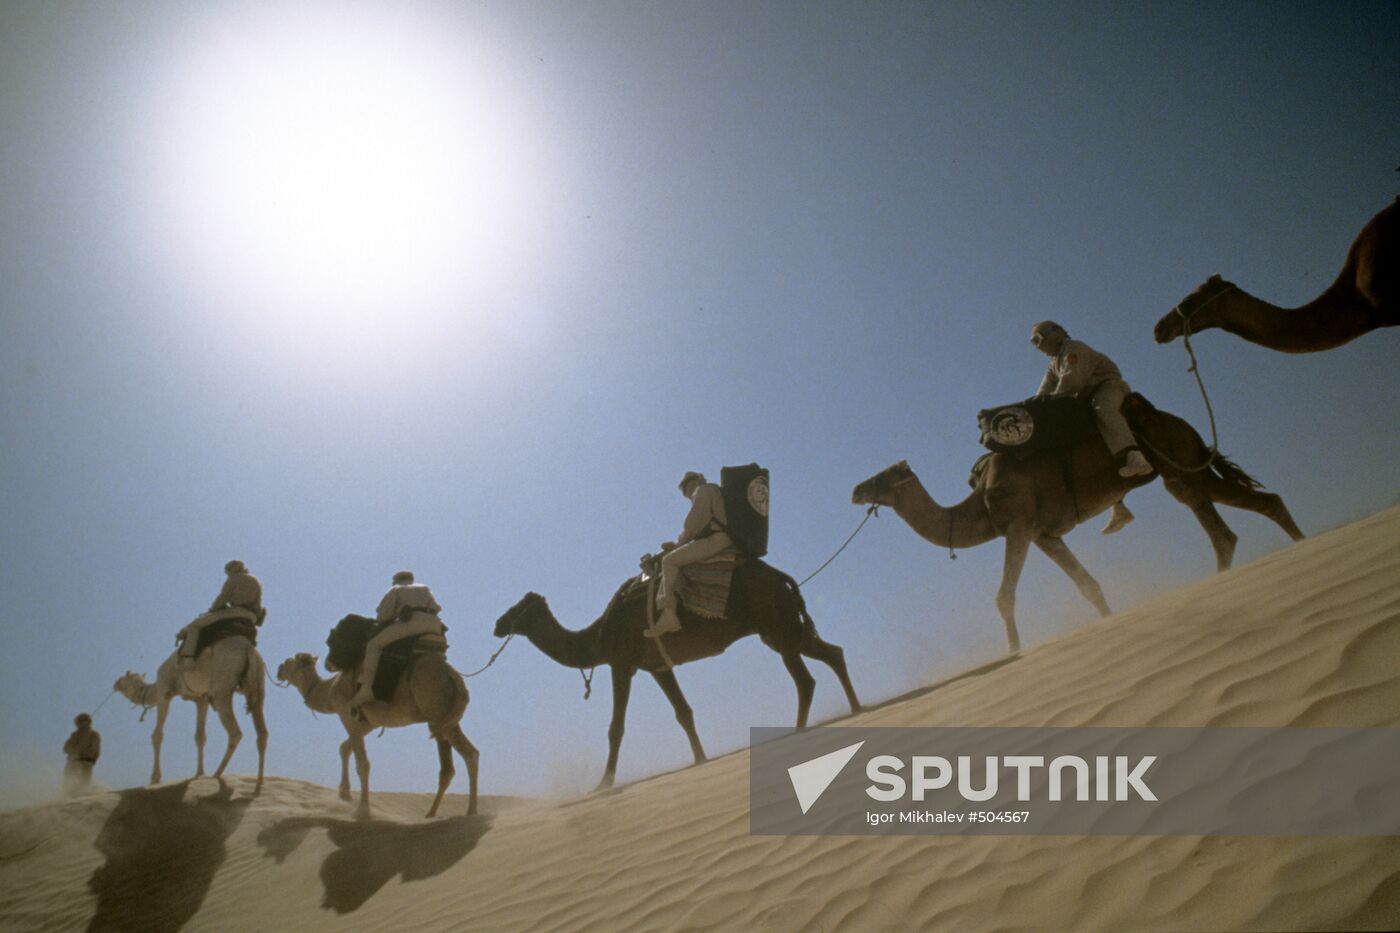 Jacek Palkiewicz crosses the Sahara Desert